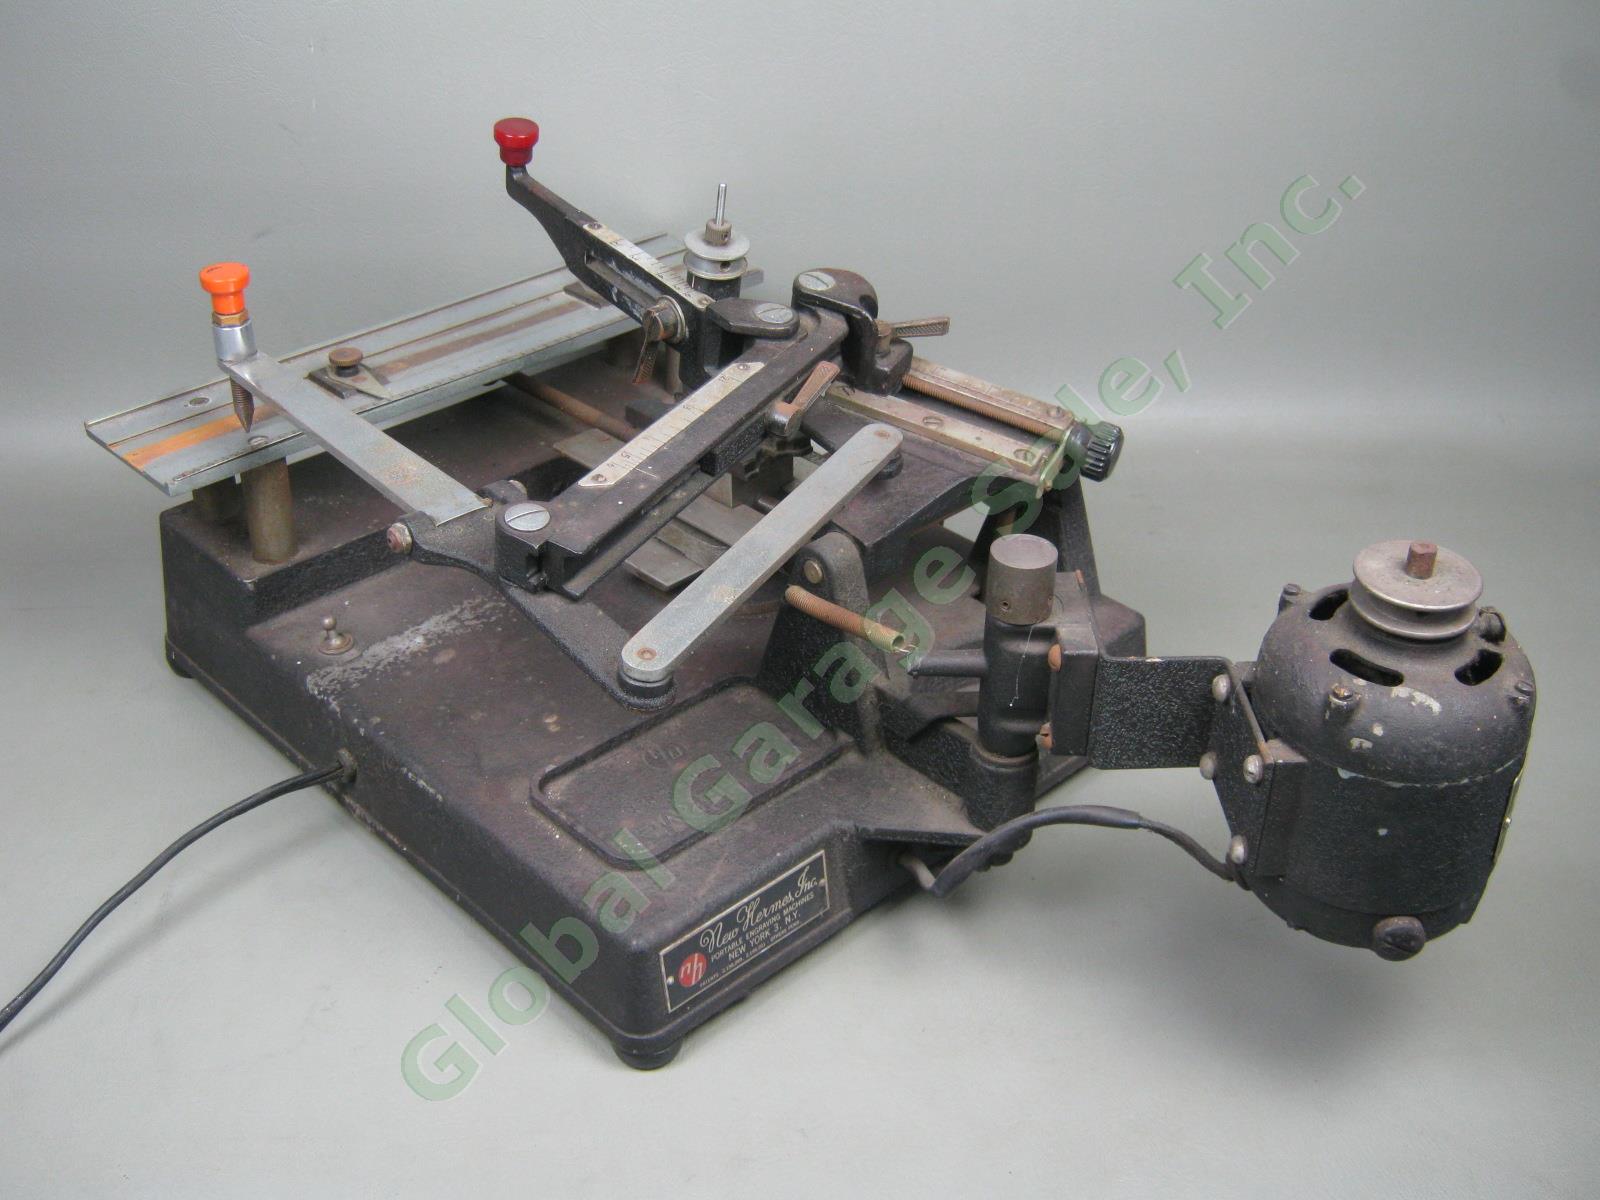 Vtg Antique New Hermes Portable IND EM Engraving Machine + Tools Accessories Lot 2